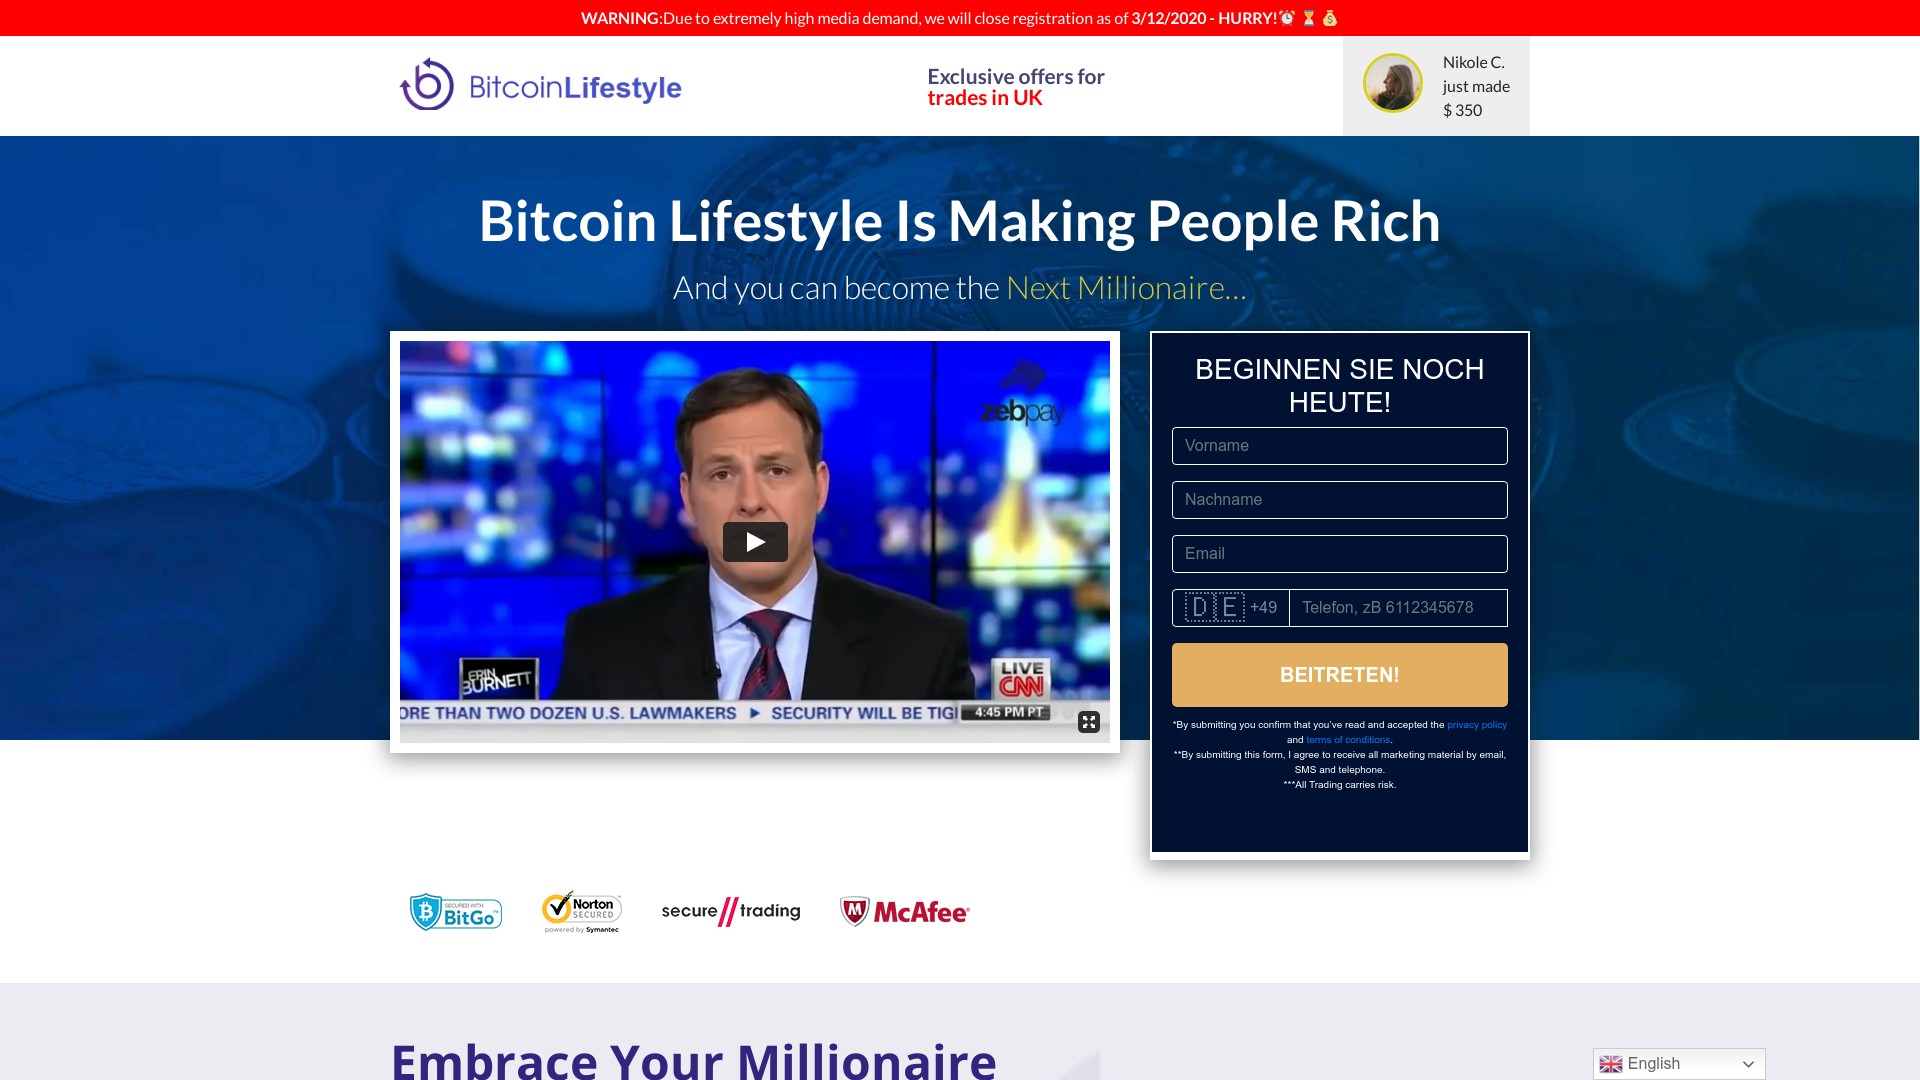 Bitcoin Lifestyle or BitcoinLifestyle located at www.bitcoinlifestyle.io